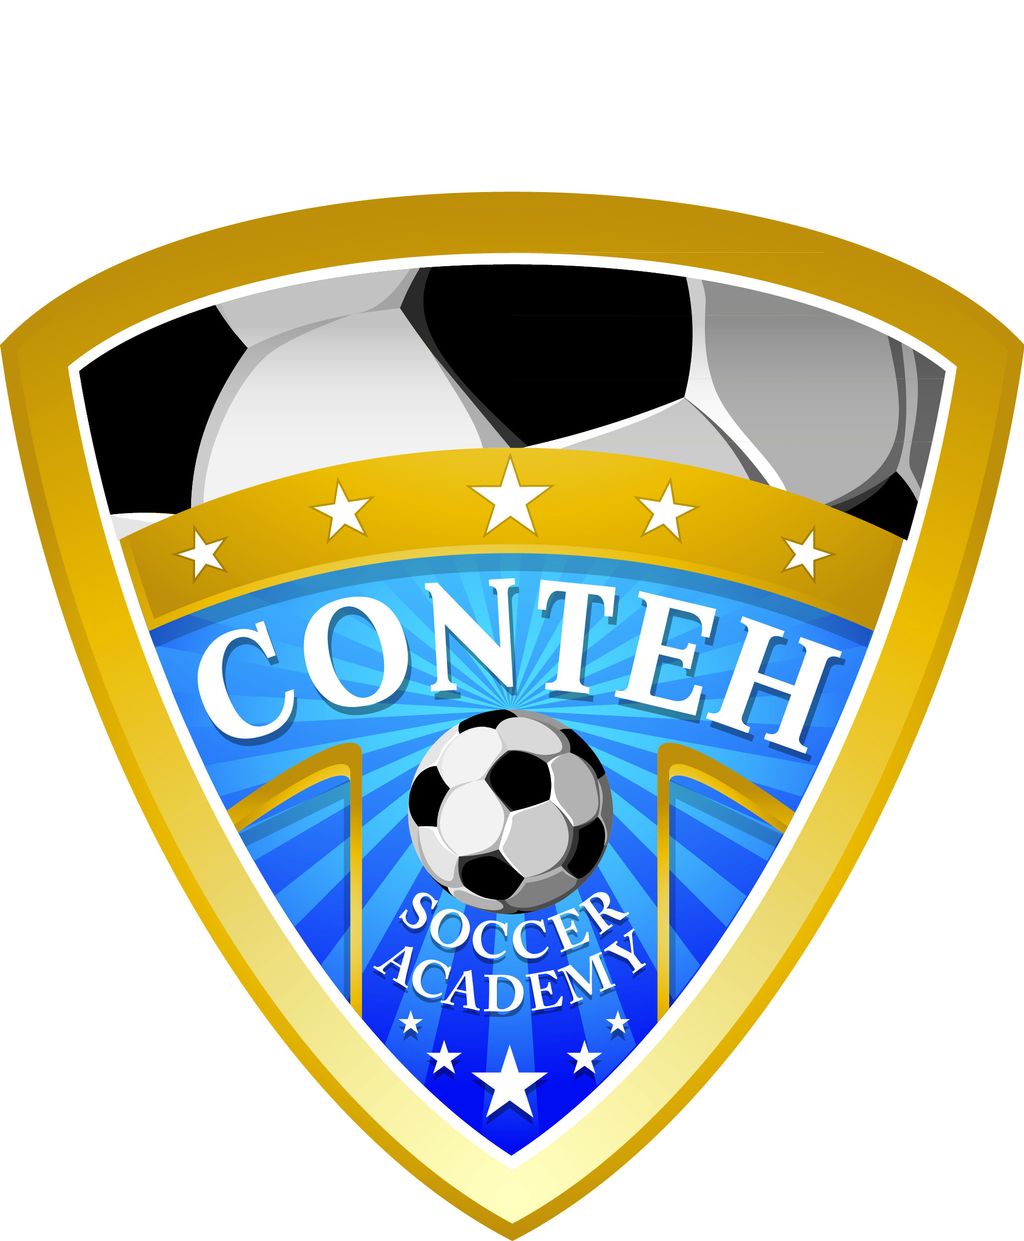 Conteh Soccer Academy, LLC